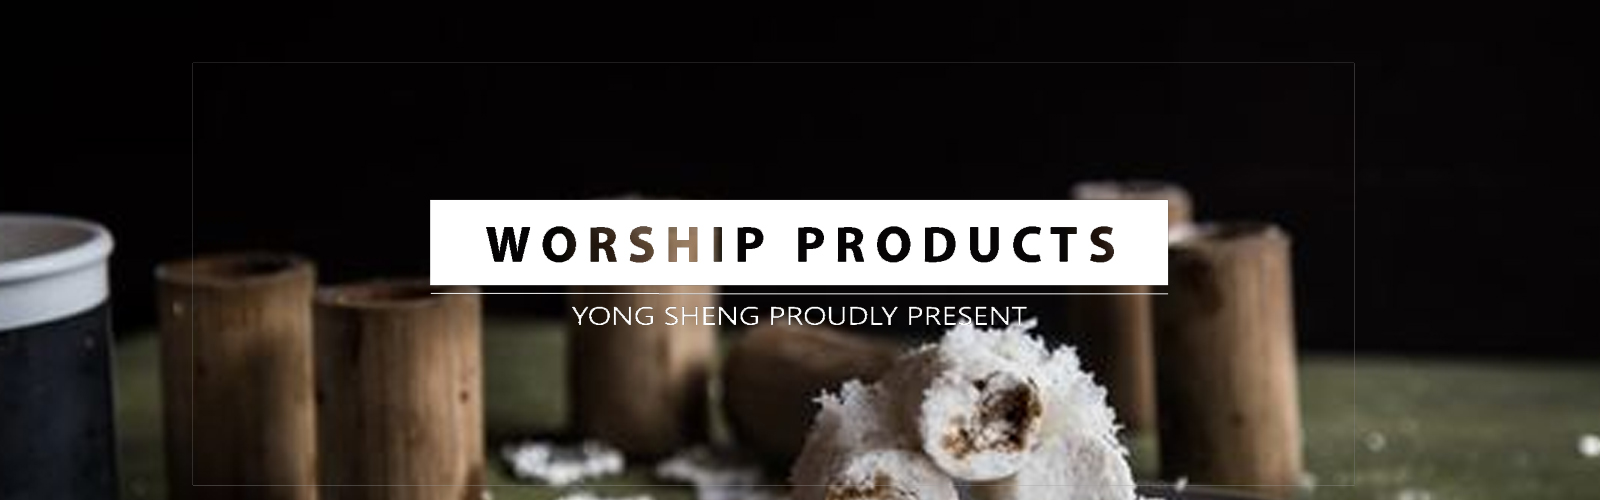 Worship Product 1600 x 500